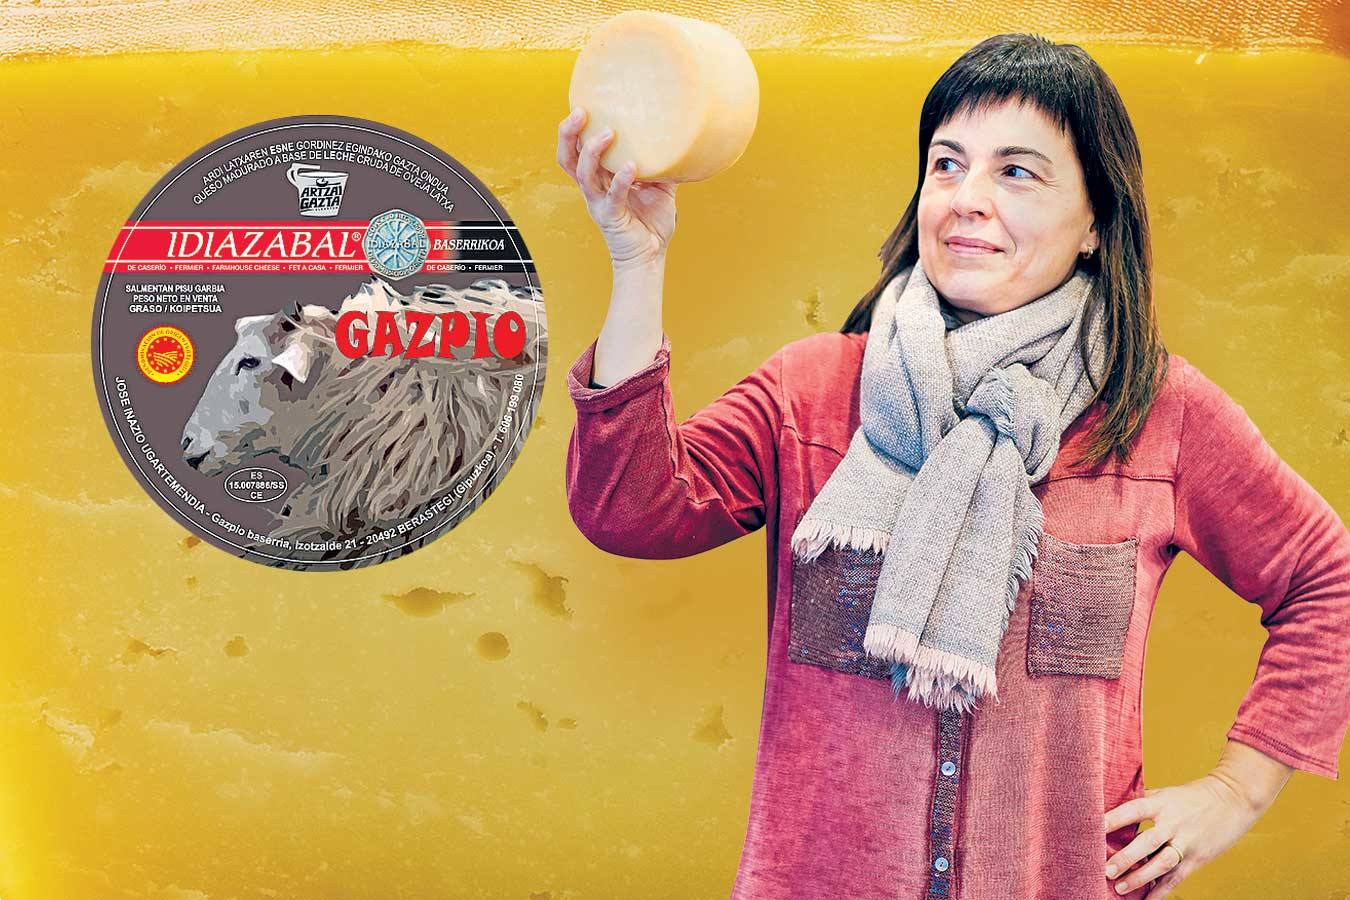 GAZPIO | Ainhoa Arregi | Presentaron cinco quesos, obtuvieron cuatro reconocimientos: dos platas (en queso duro de oveja e Idiazabal), un bronce en queso protegido por DO y un oro en producción inferior a dos. Dirección Gazpio baserria. Bº Izotzalde, 21. Berastegi (Gipuzkoa).